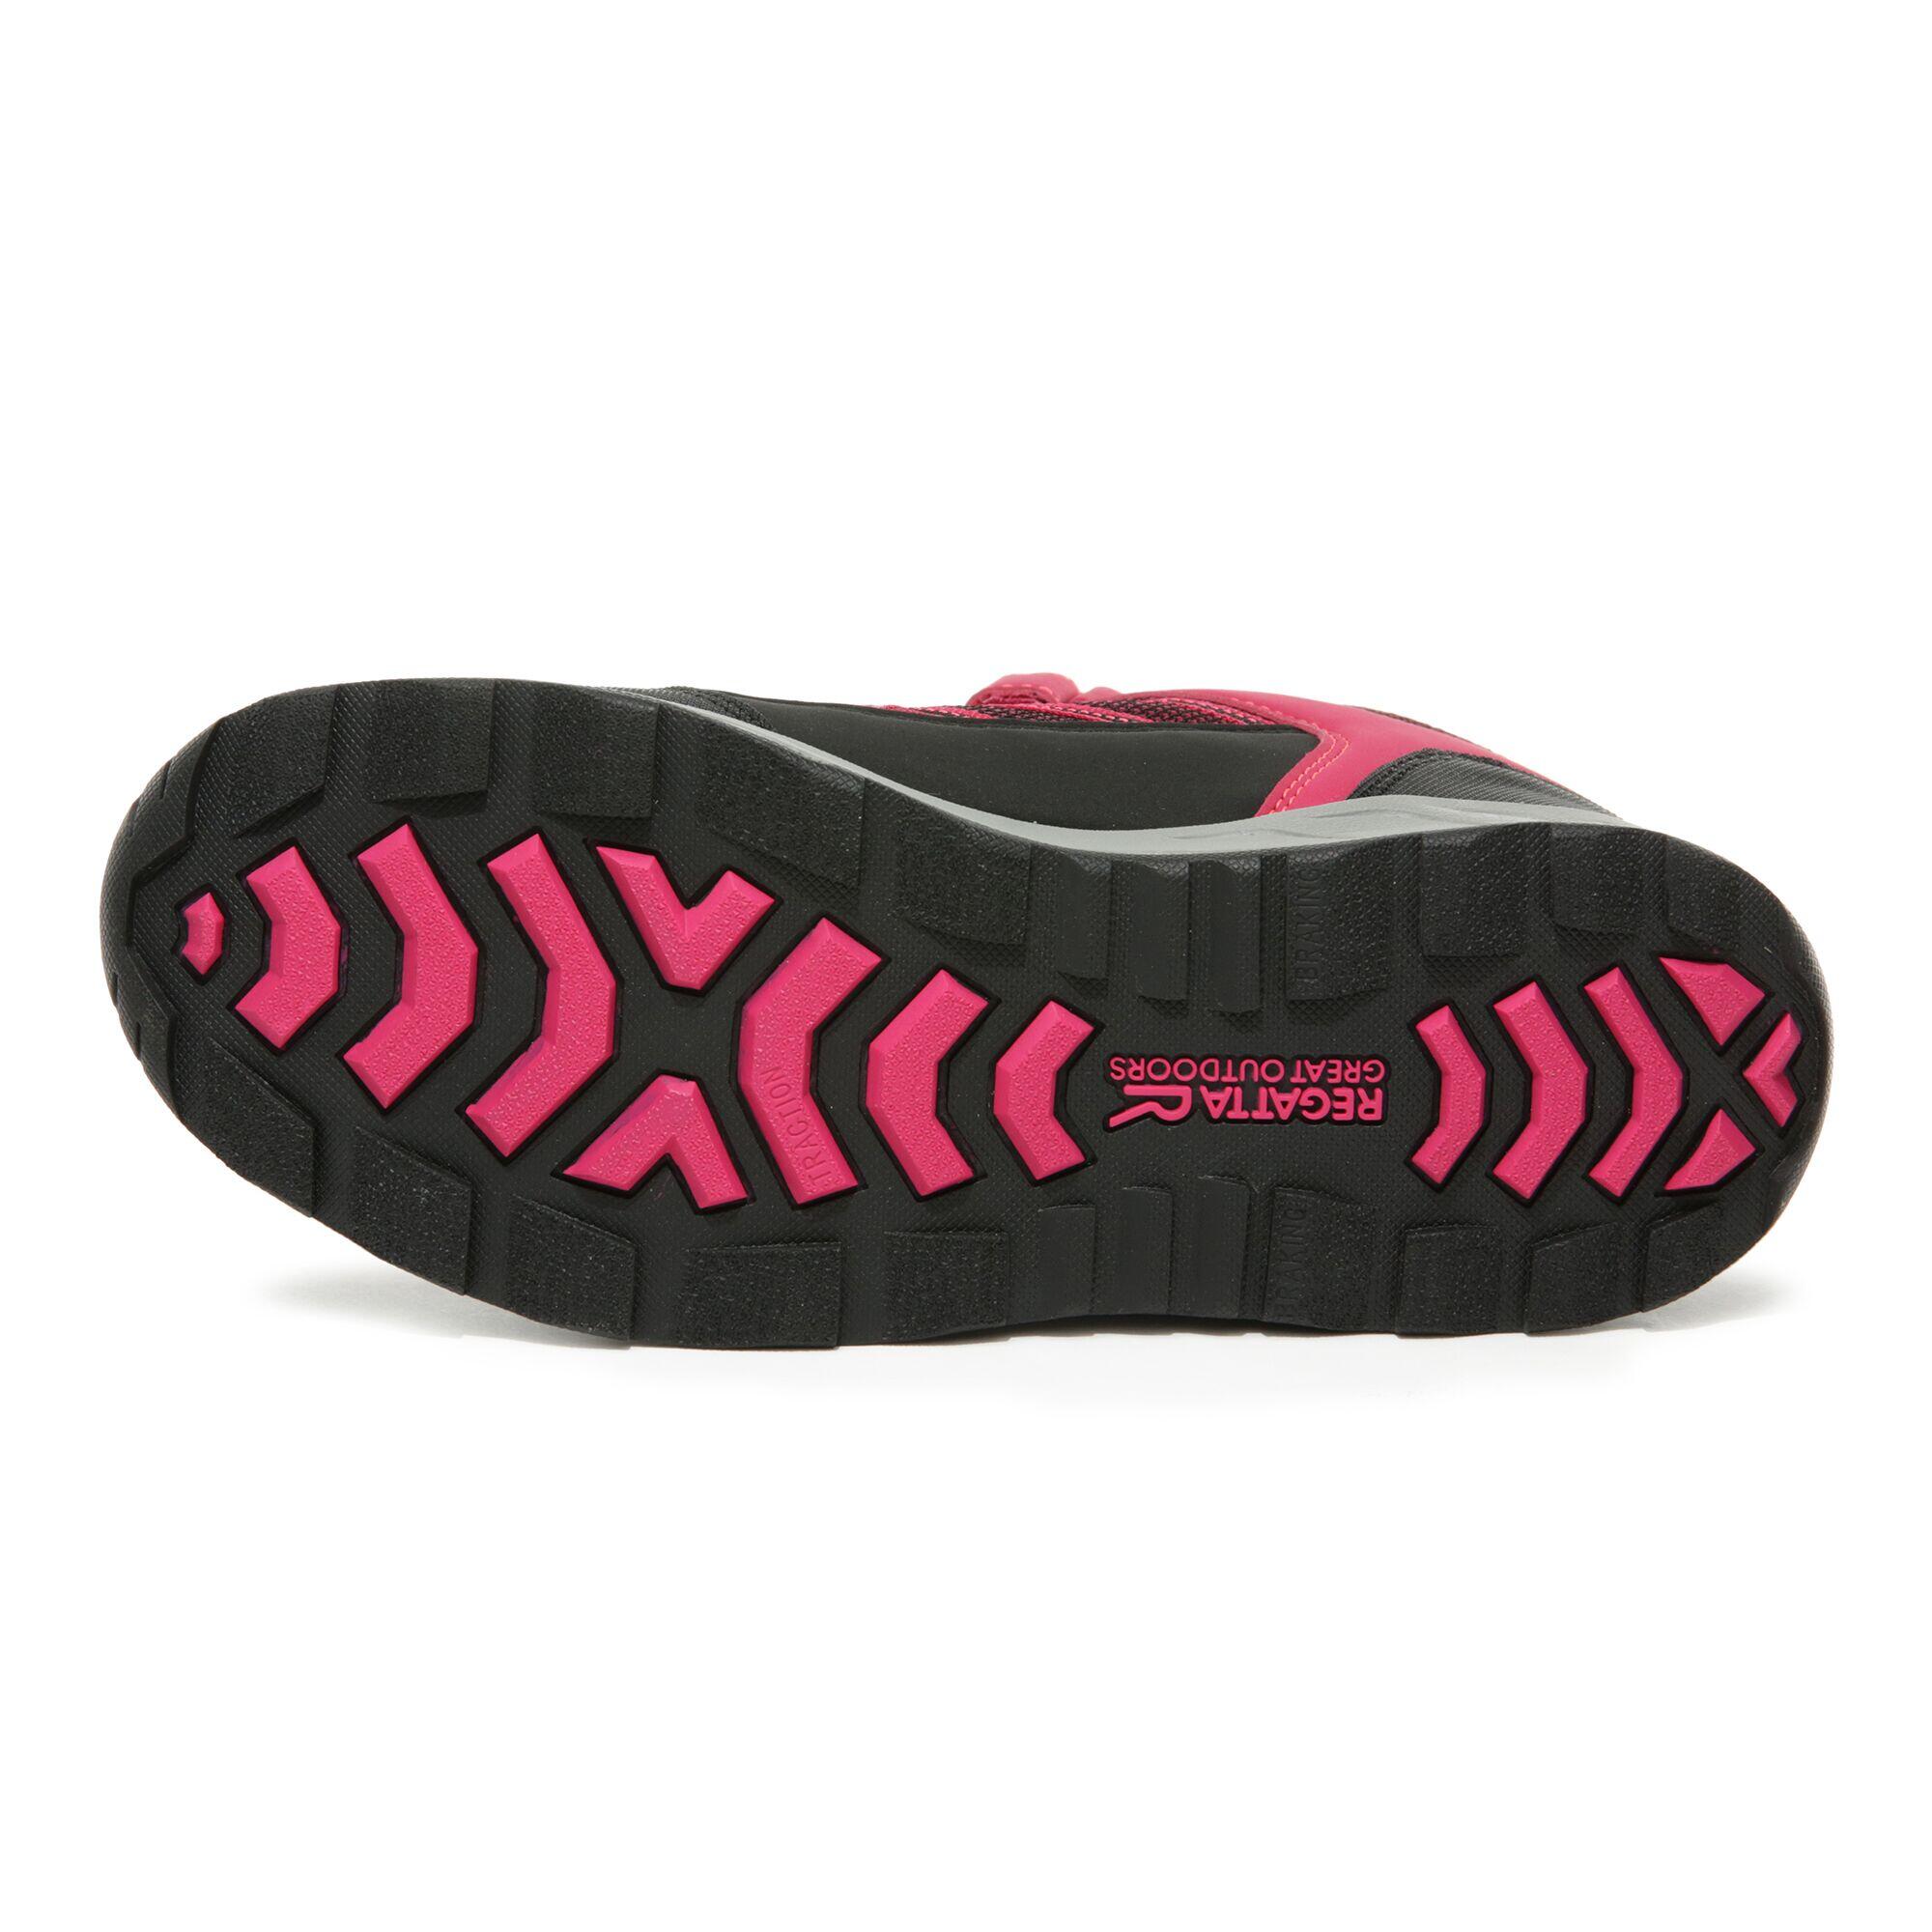 Samaris V Kids' Hiking Waterproof Mid Boots - Cerise/Neon Pink 5/6